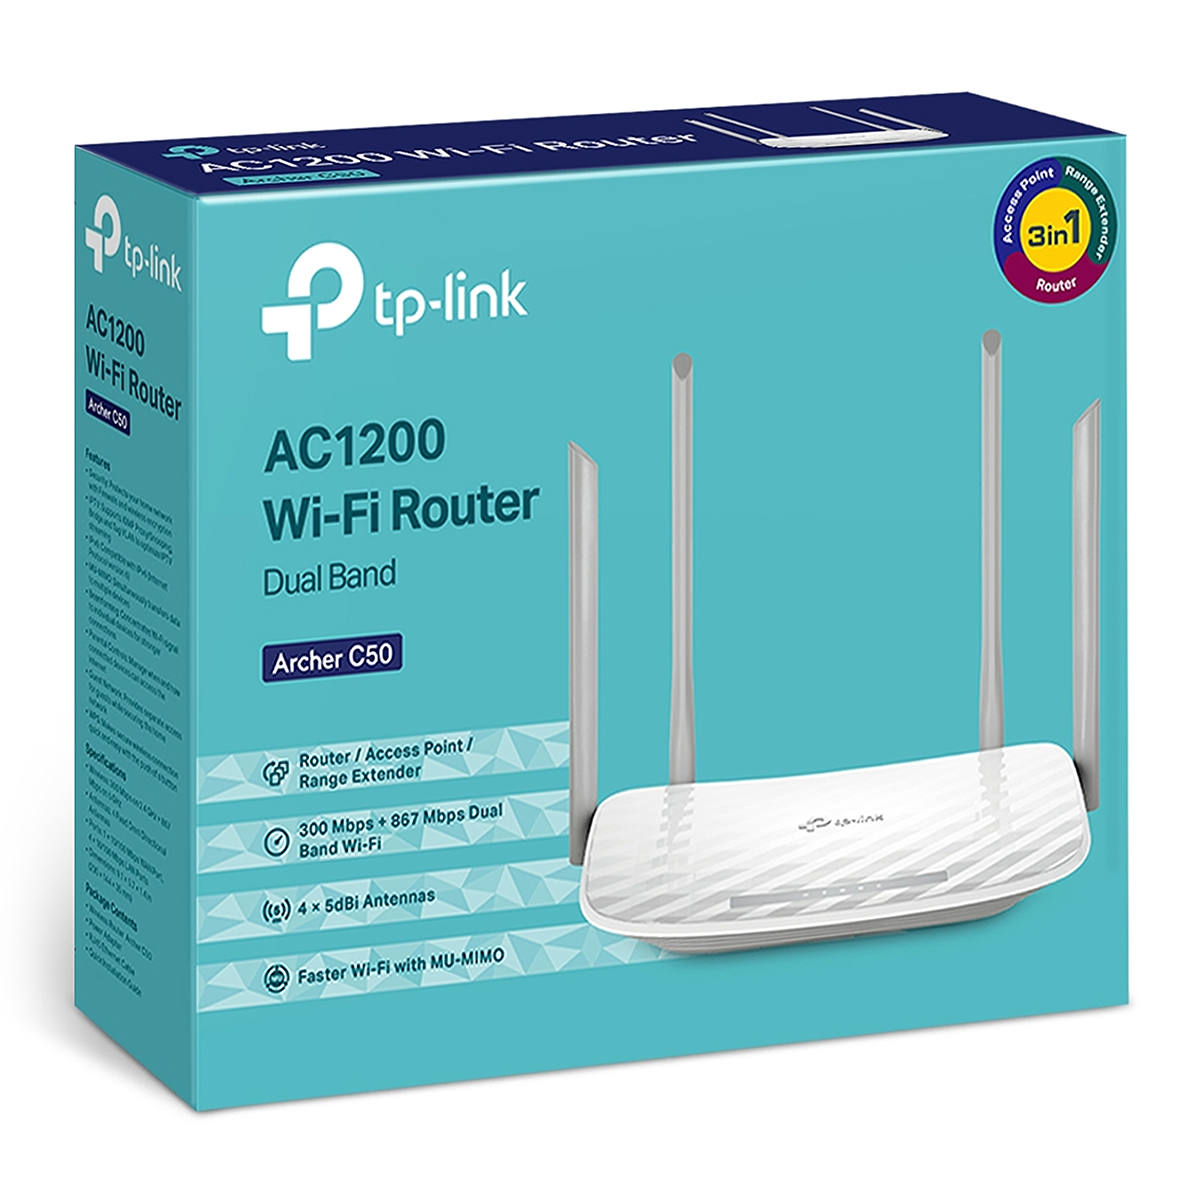 Roteador Wireless AC1200 TP-Link Archer C50 Dual Band Wi-Fi 867 Mbps + 300 Mbps 4 Antenas Multi-Modo 3 em 1